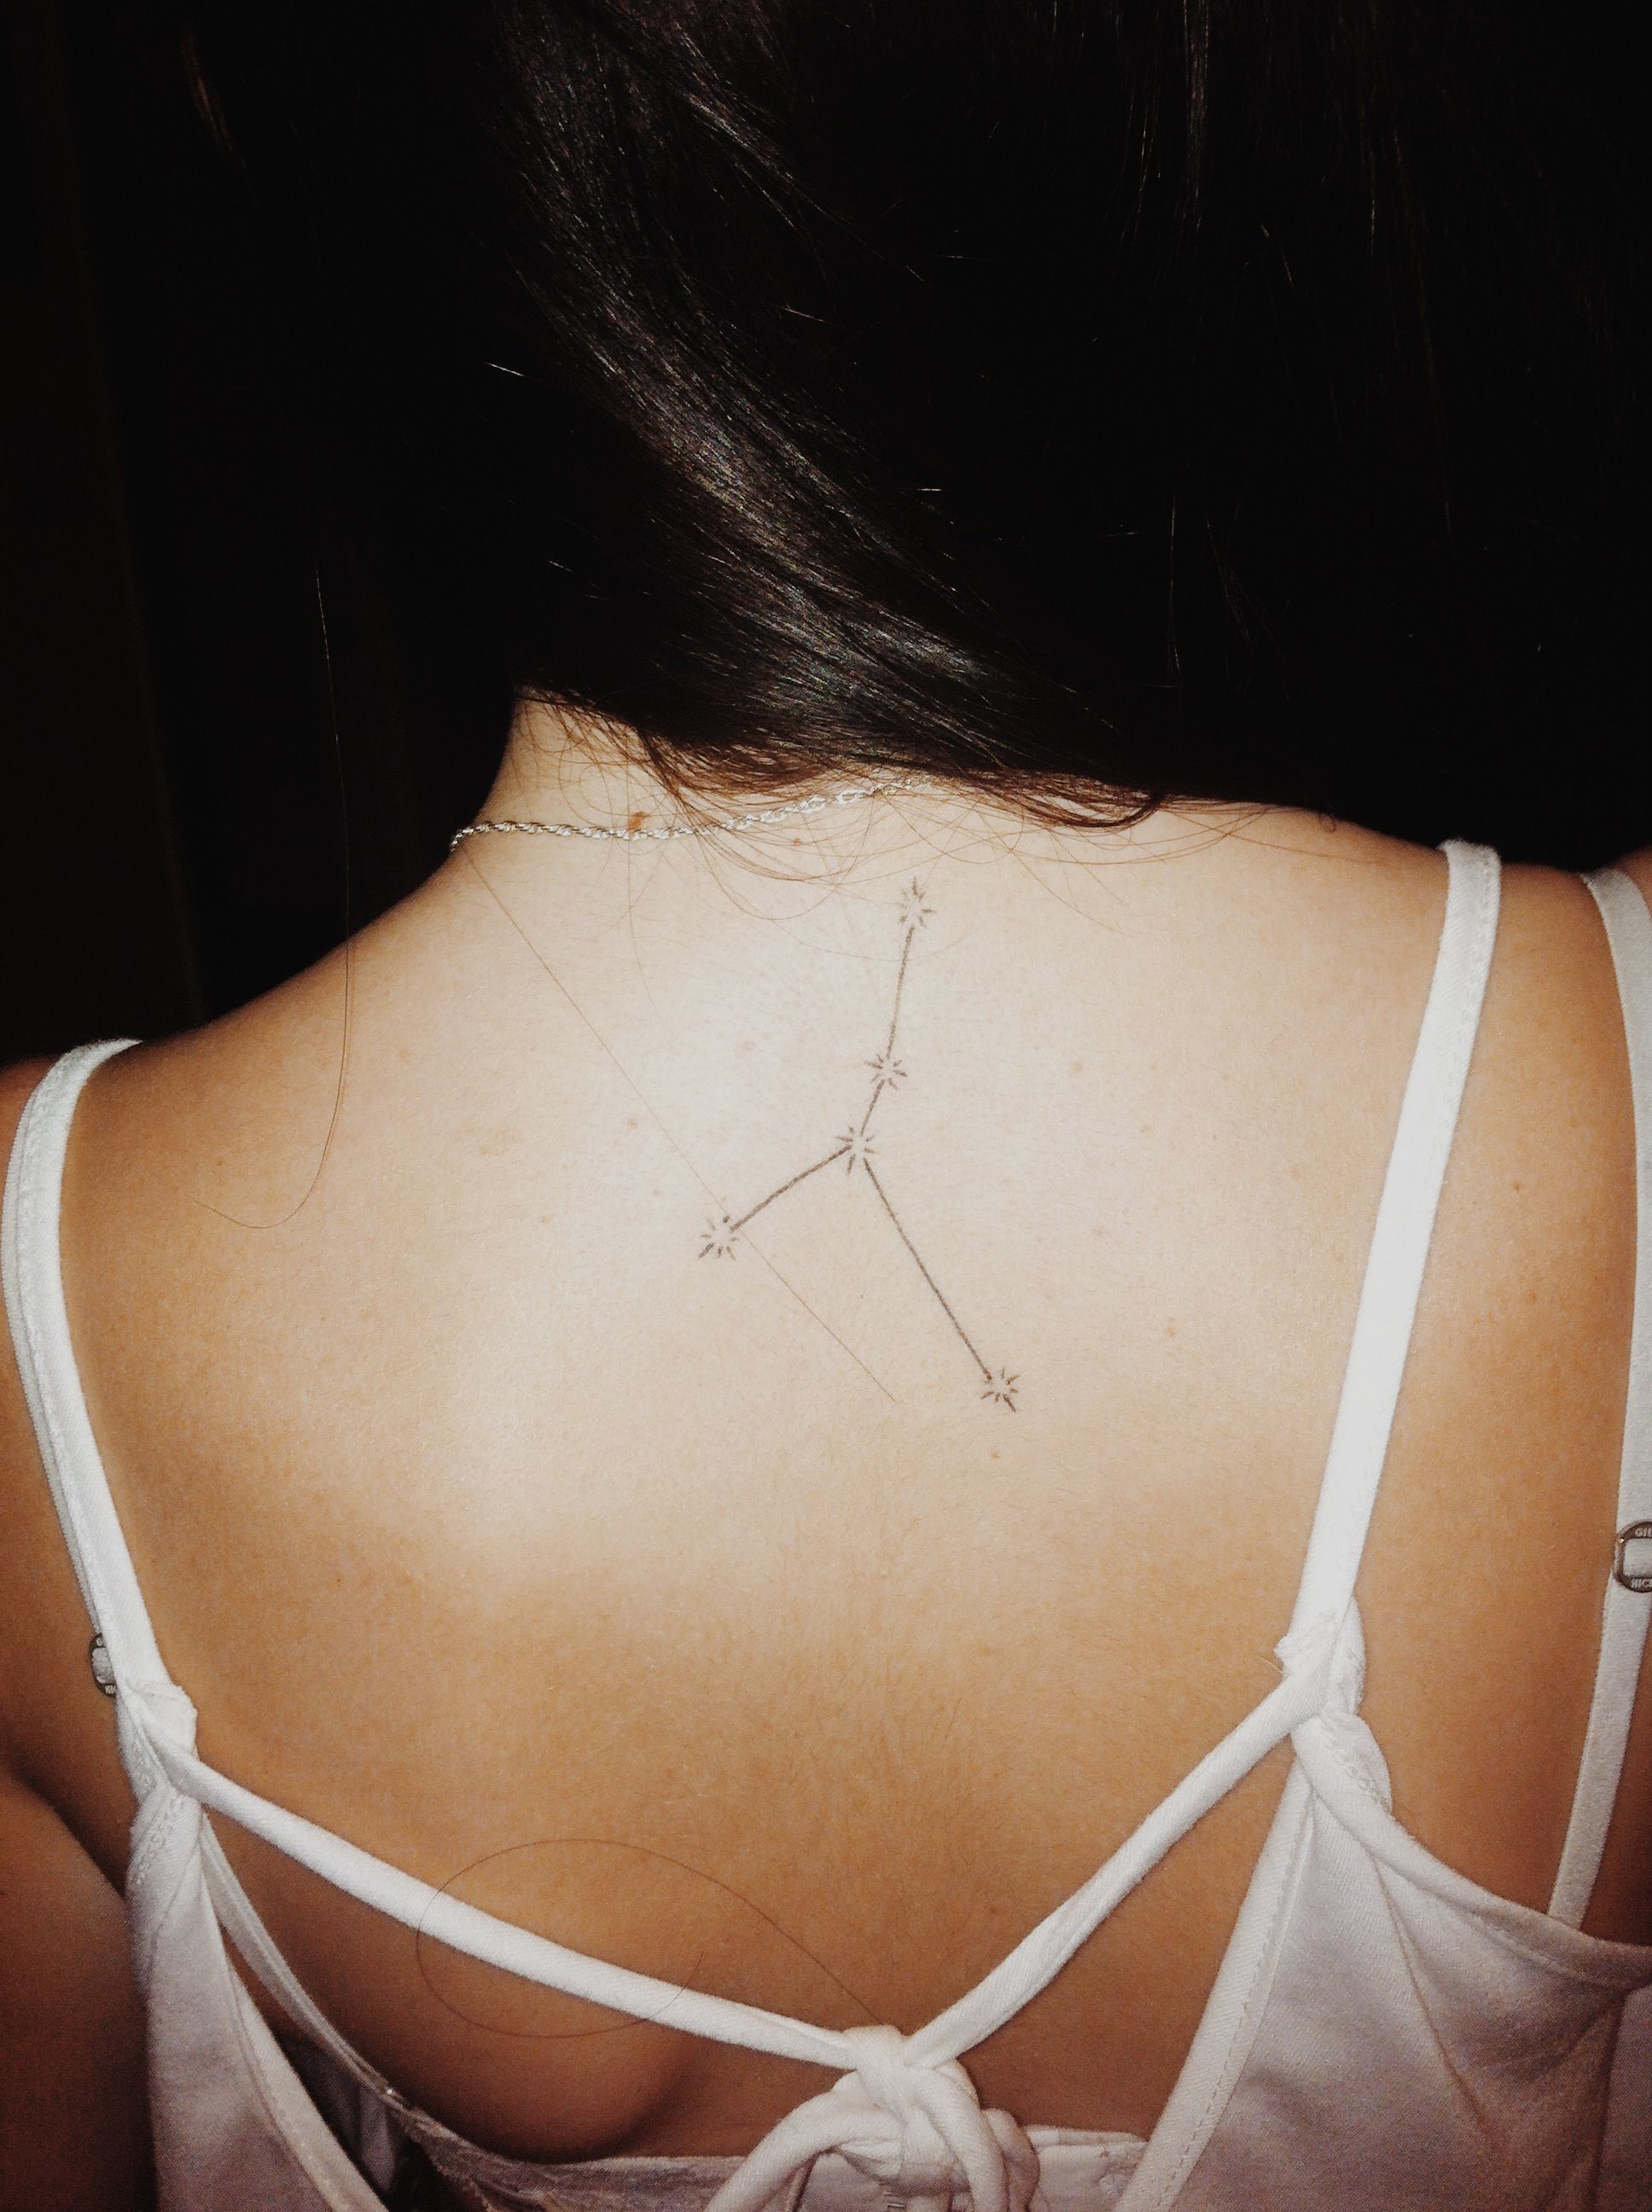 Constellation of Cancer tattoo